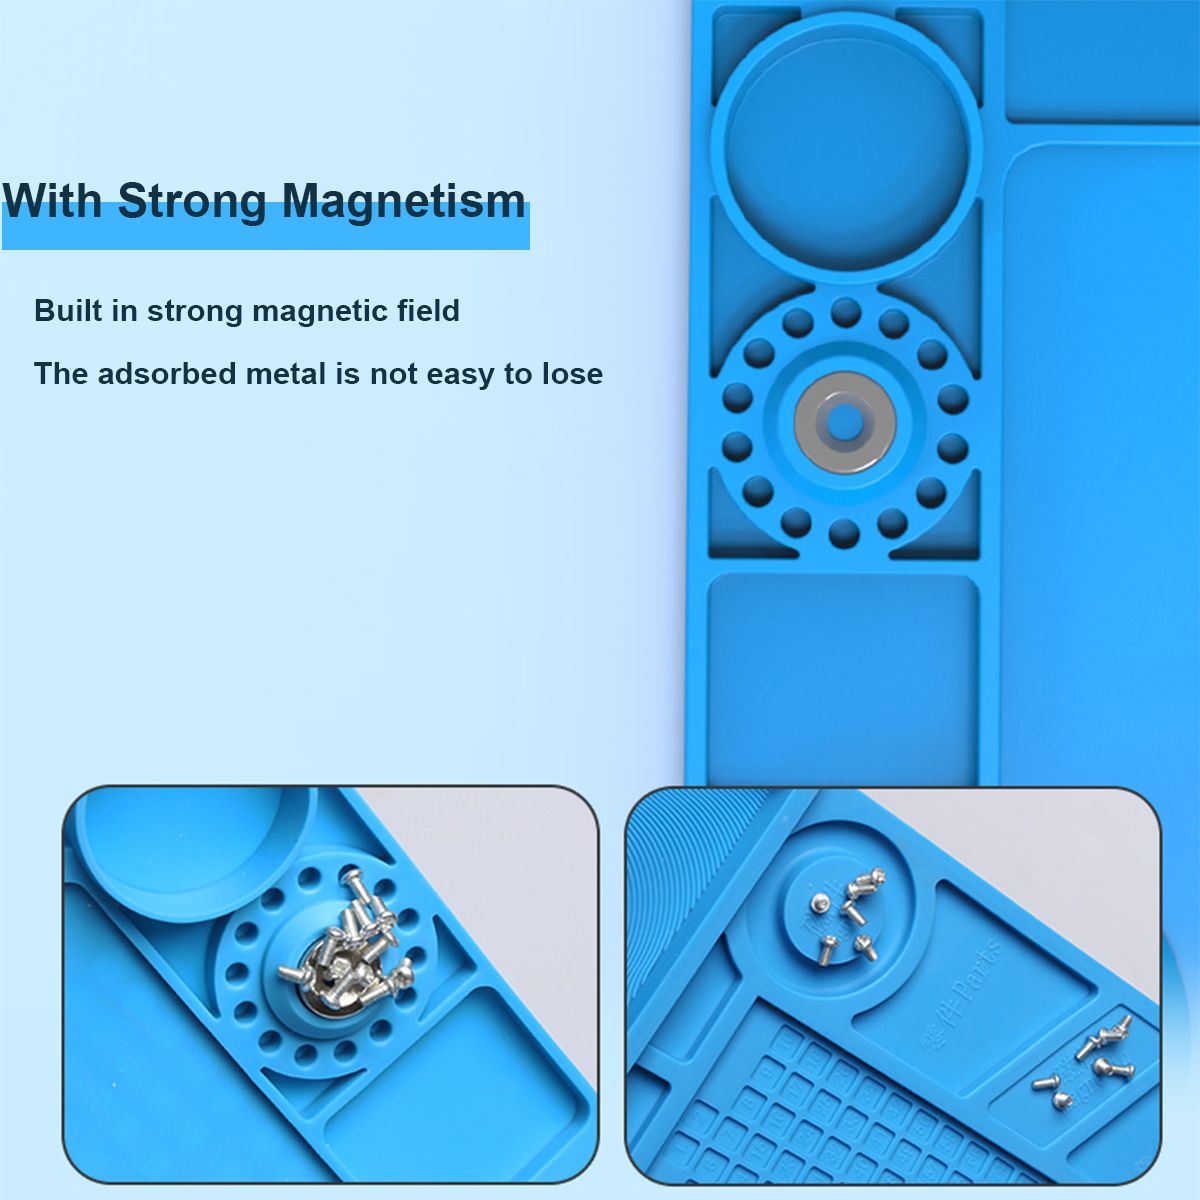 Maintenance-3D-Wrist-Guard-Silicone-Heat-Insulation-Desk-Pad-Mat-Soldering-Phone-1739389